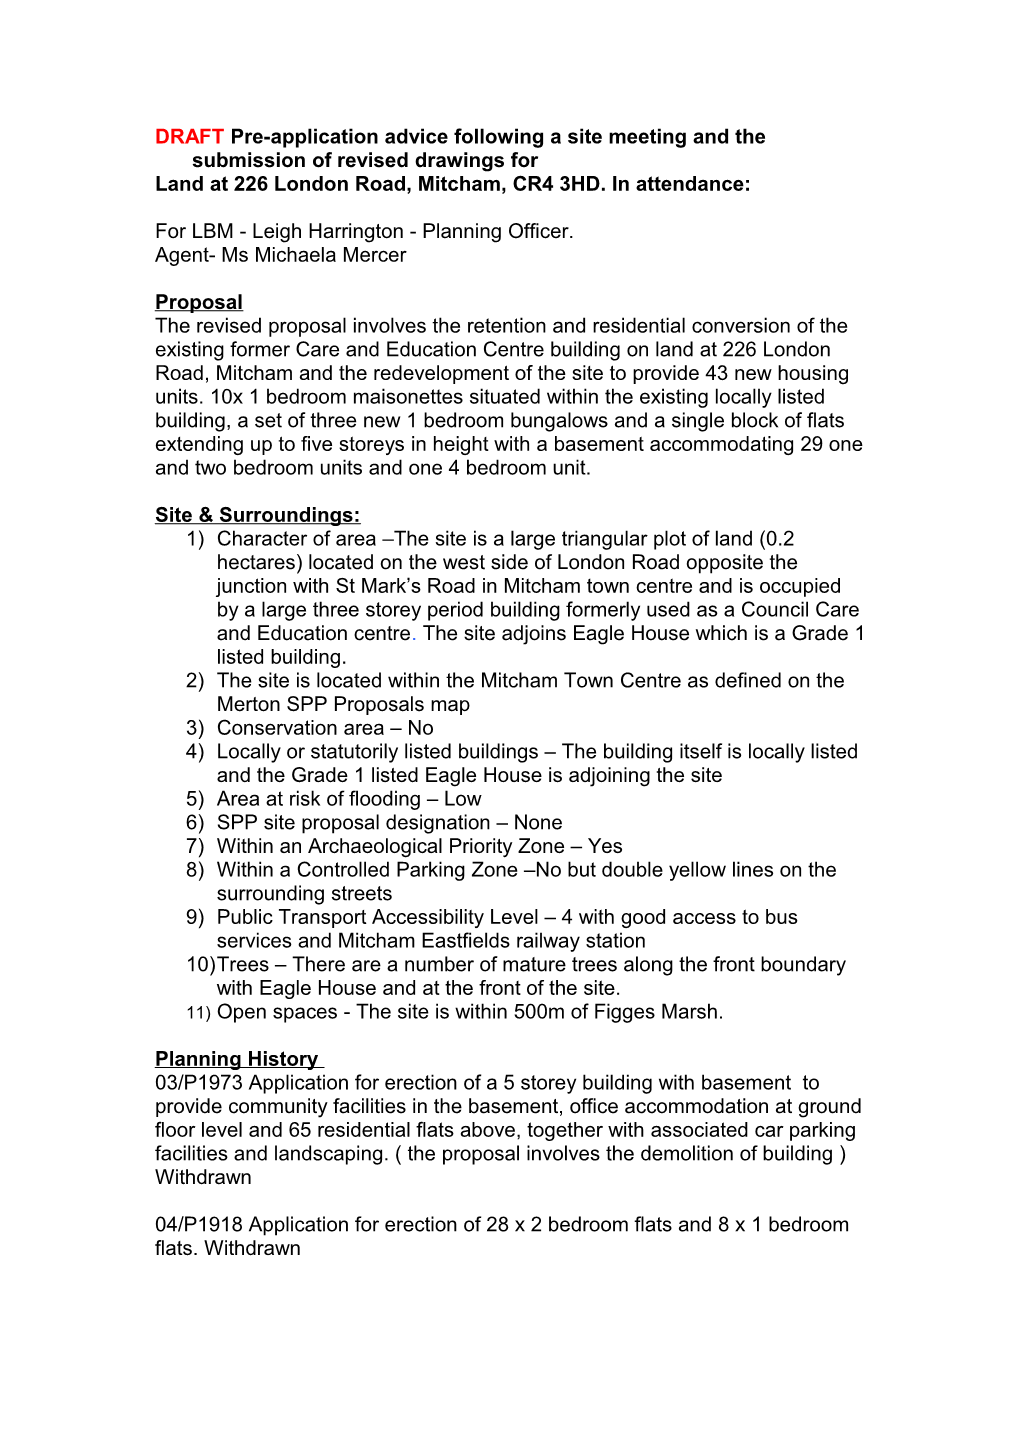 NOTES of PRE-APP MEETING HELD 31St October 2011